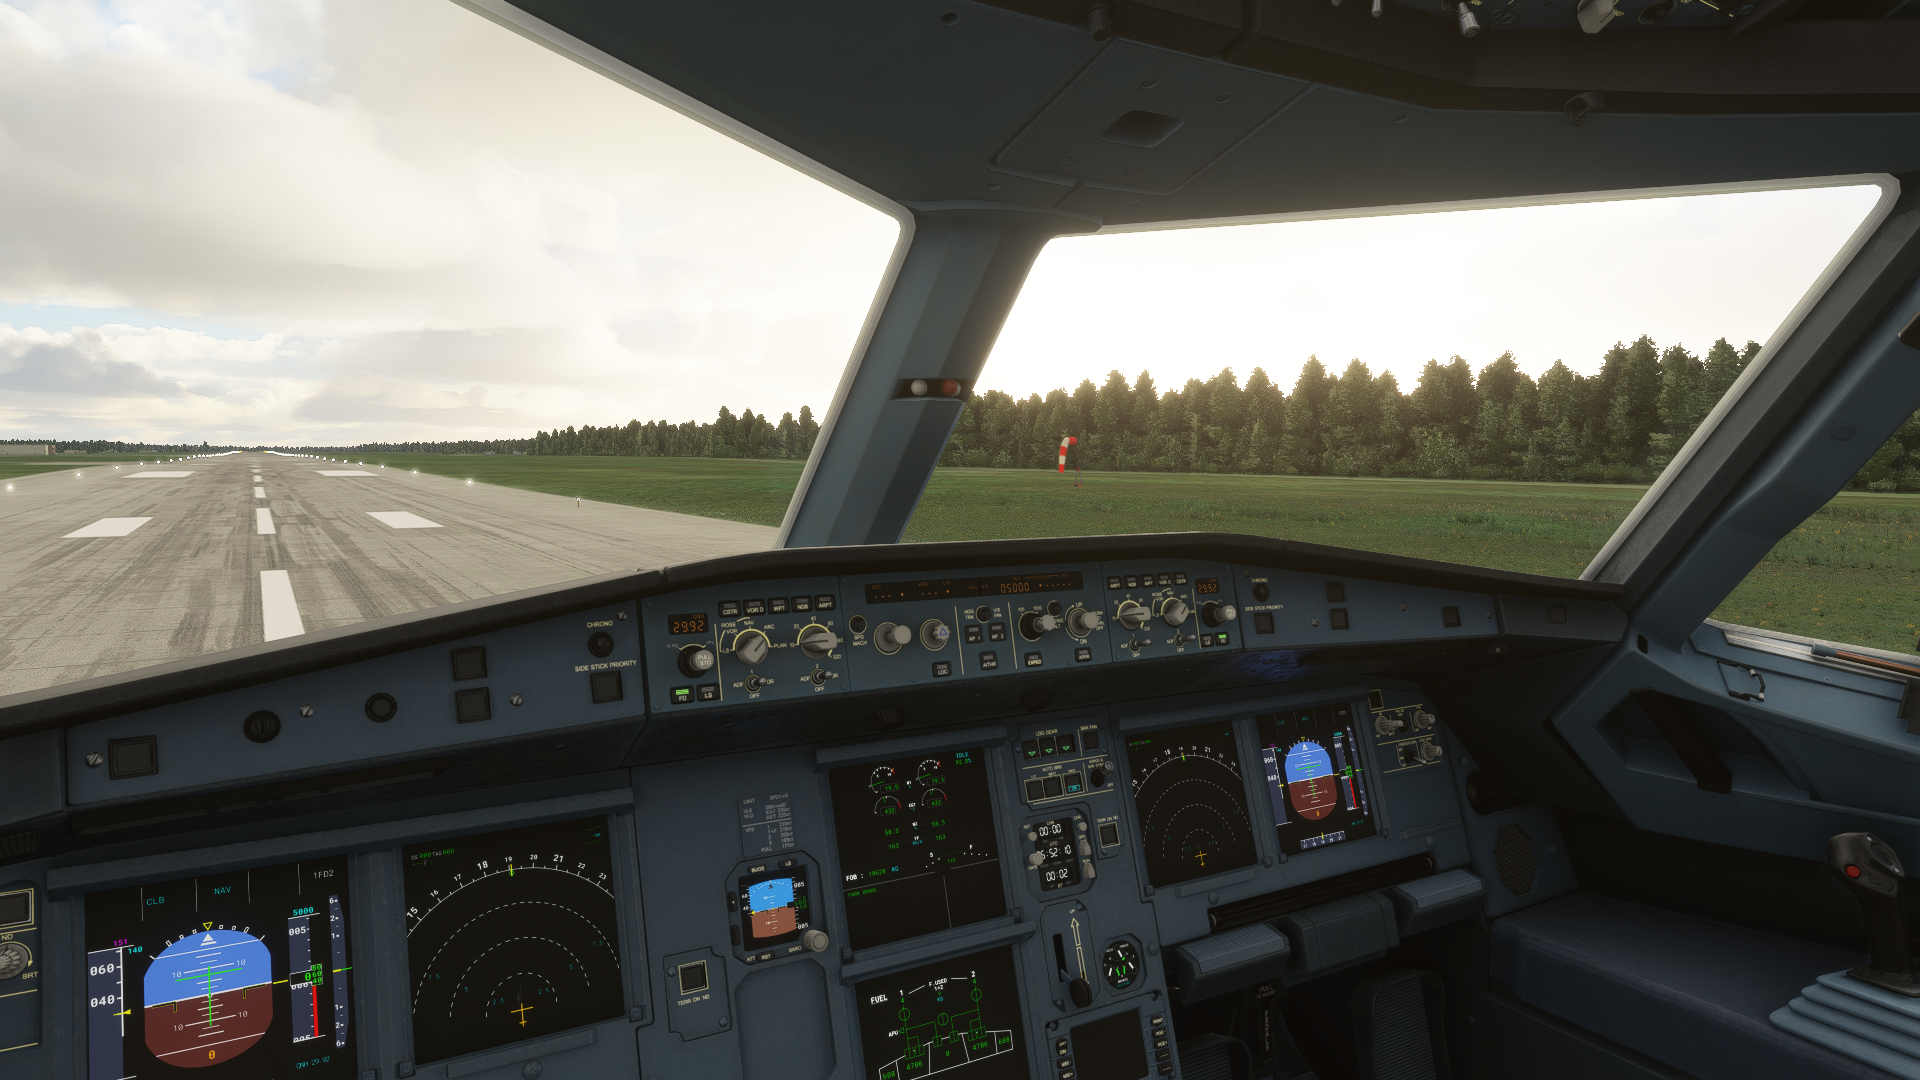 1 Microsoft Flight Simulator Wallpapers  Backgrounds   Full HD  8K